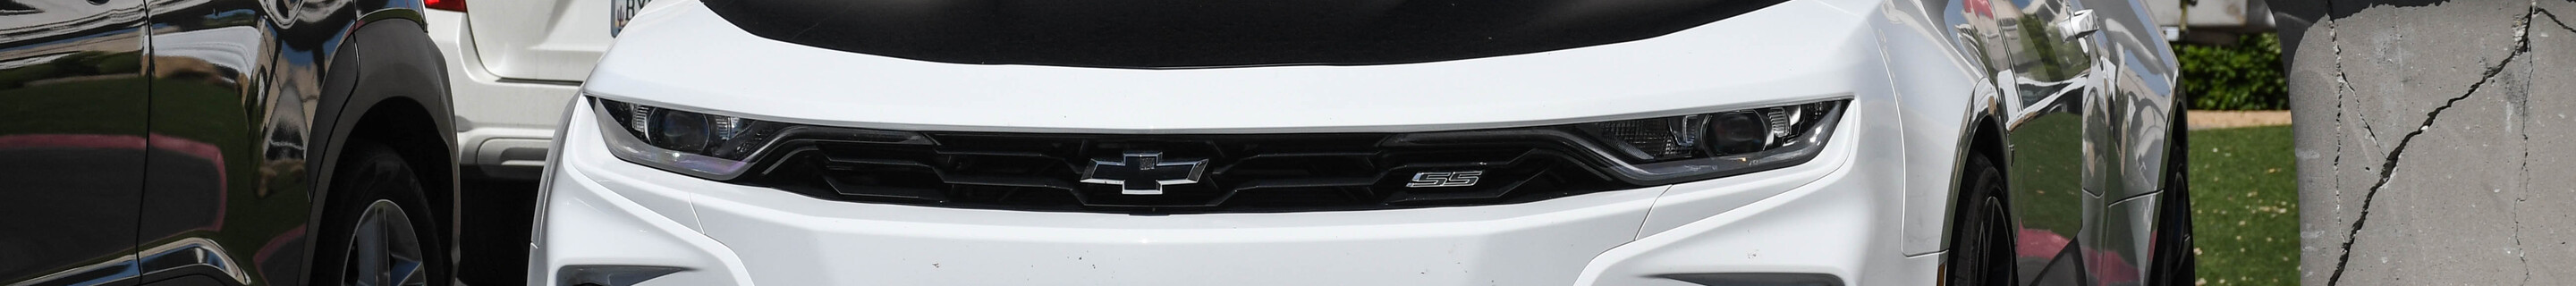 Chevrolet Camaro SS 1LE 2020